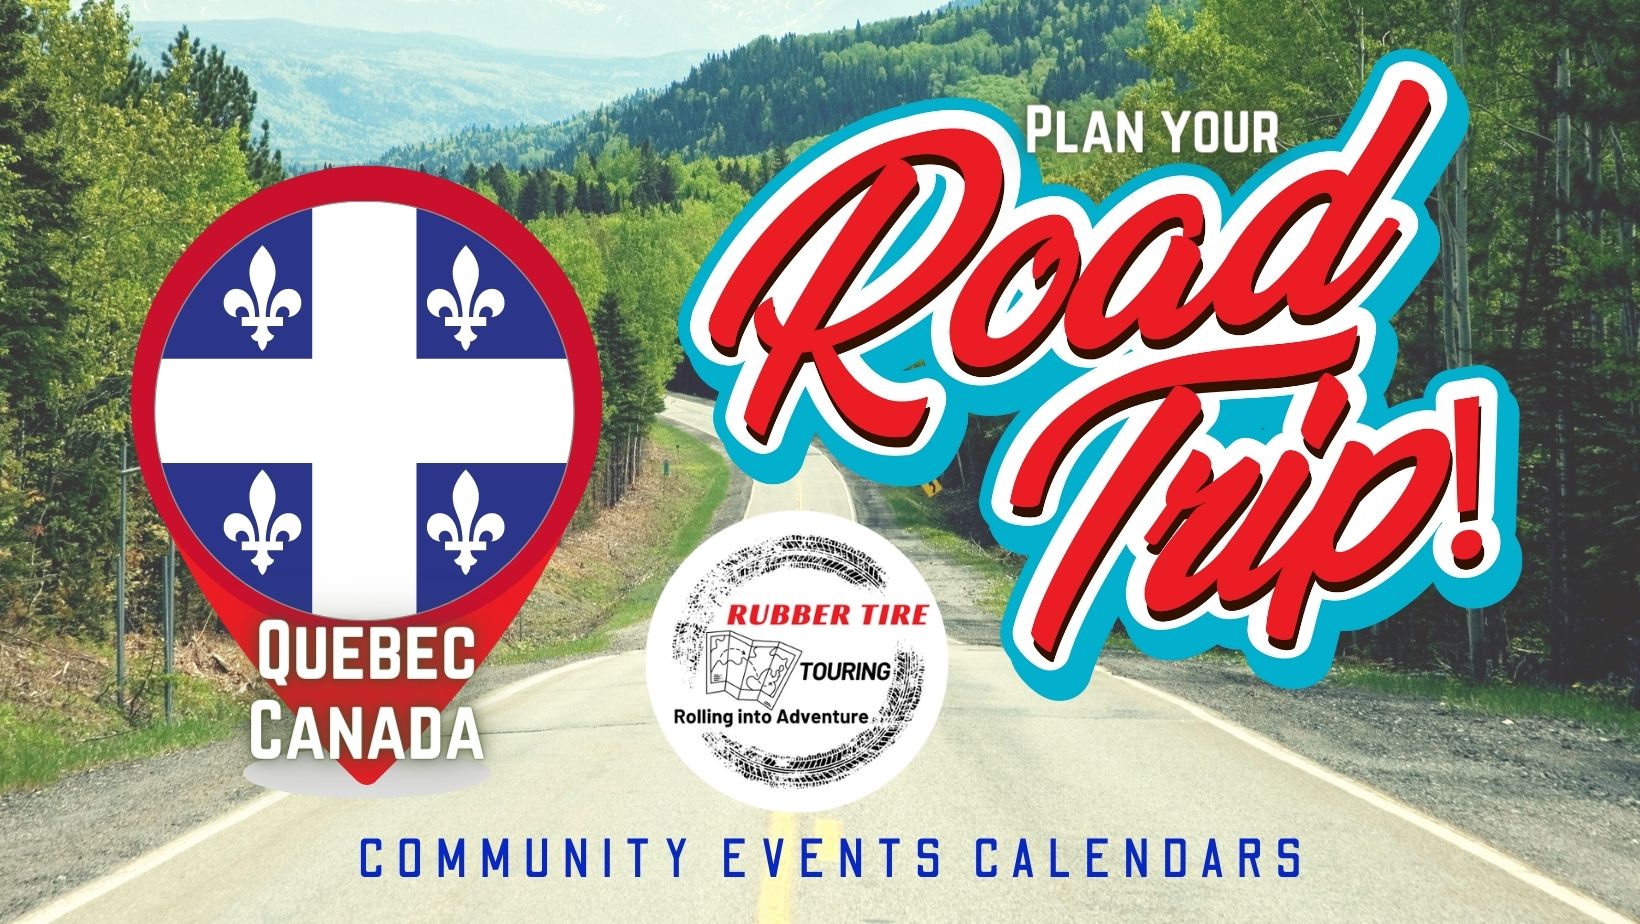 QC Events Calendar - Plan your road trip!